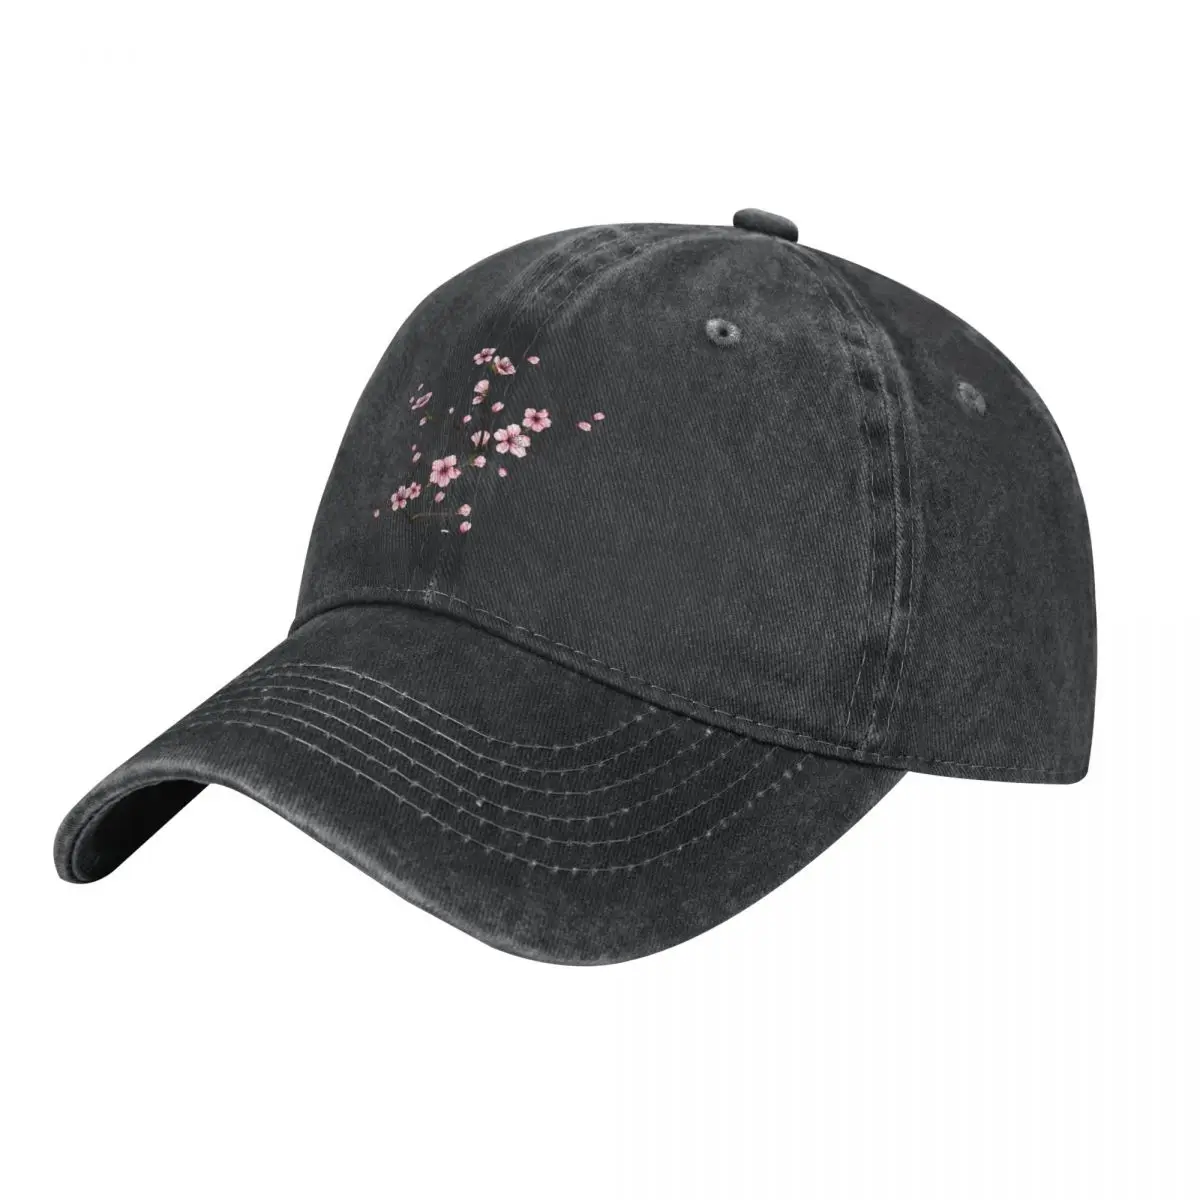 

Cherry Blossom Cowboy Hat Sunhat fishing hat Beach Outing Golf Cap Hats For Women Men's